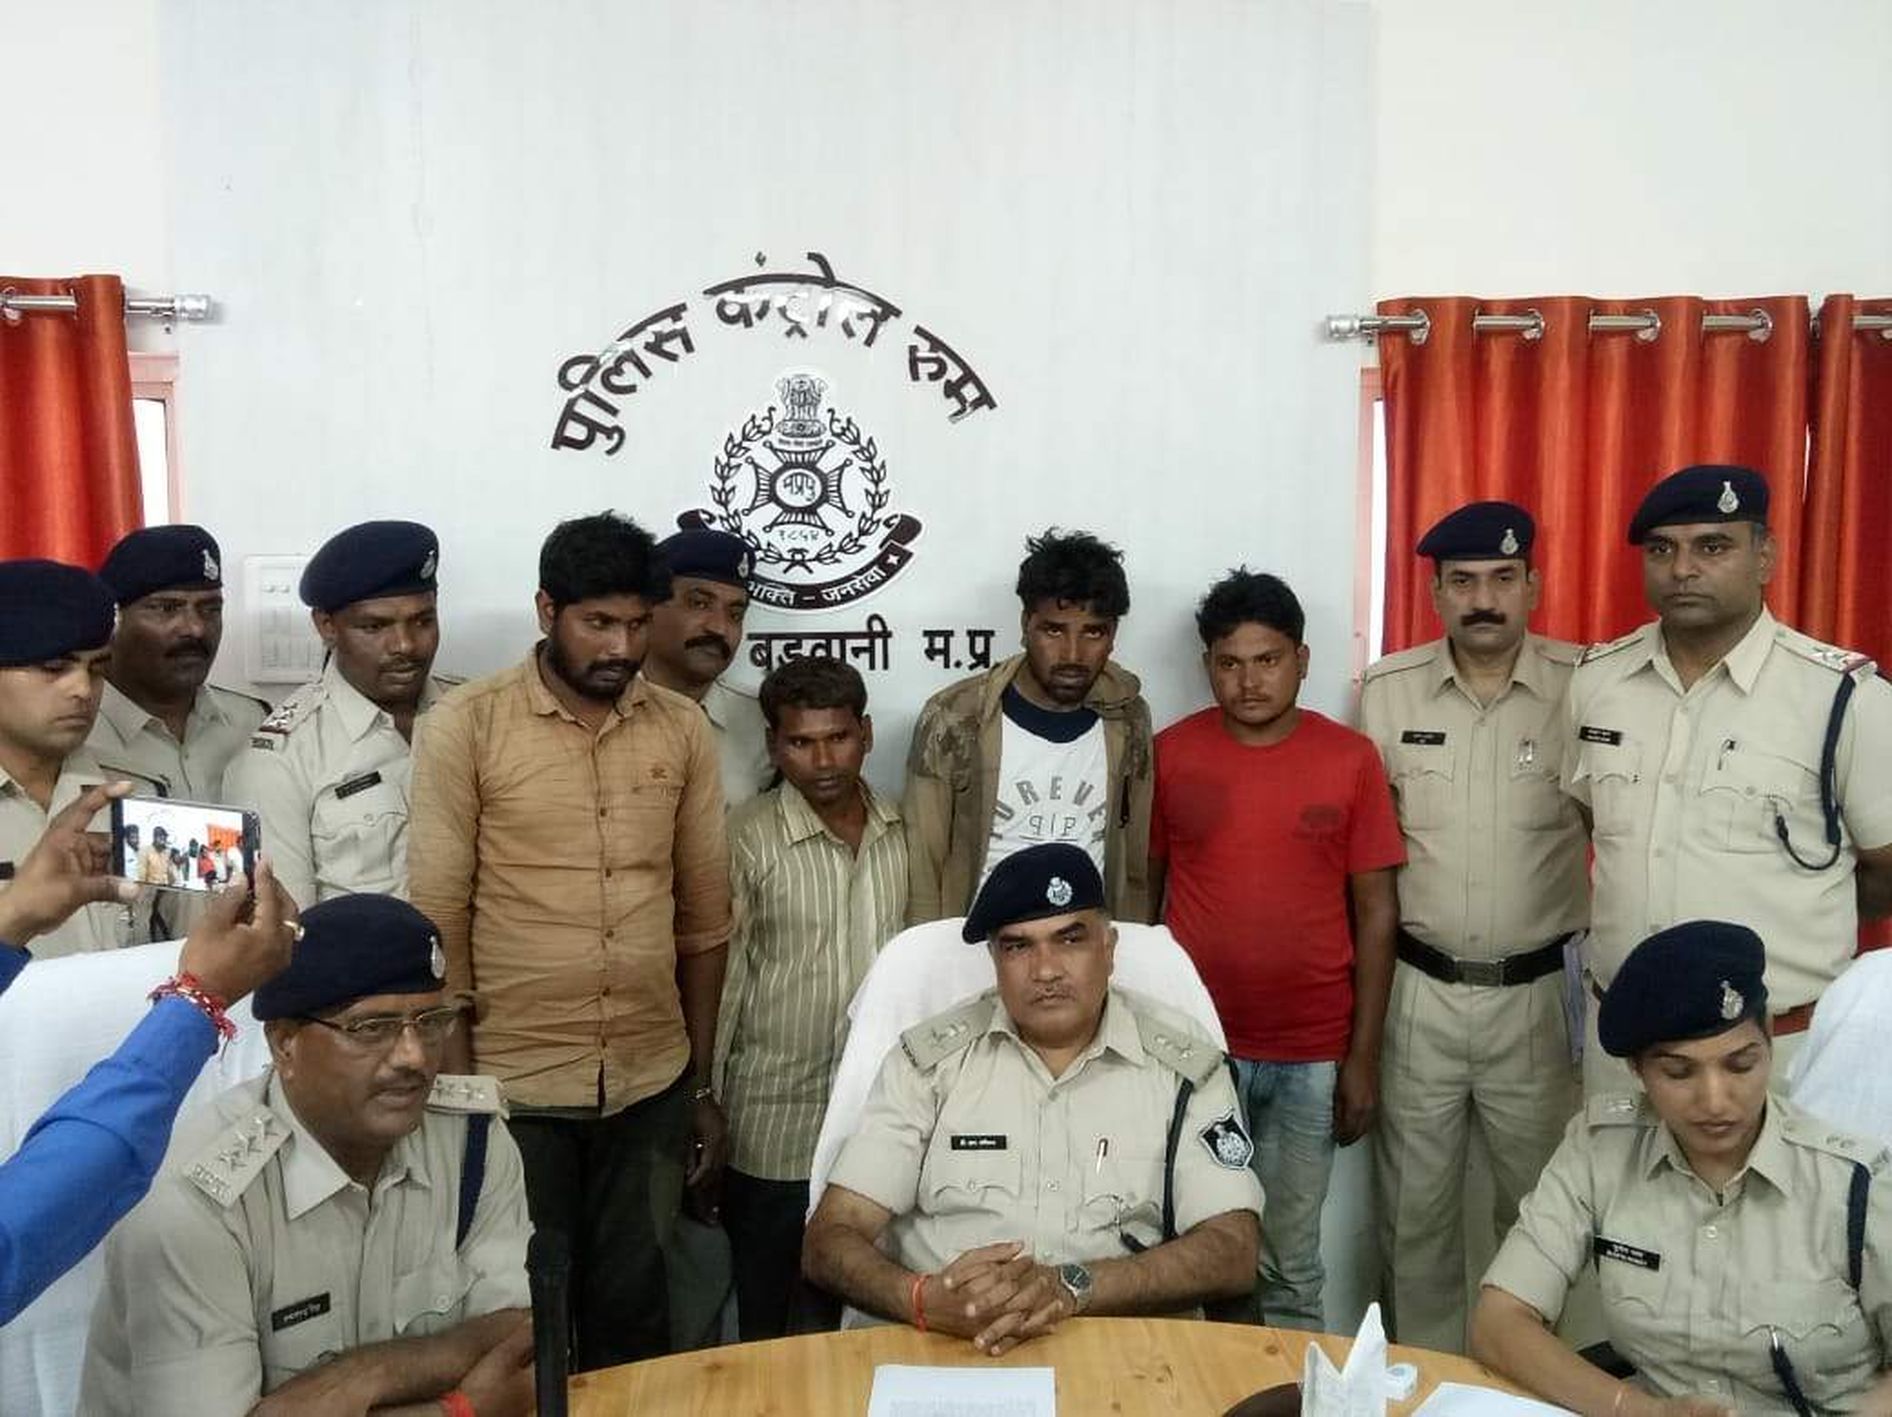 Nagalwadi police caught the bike thief gang